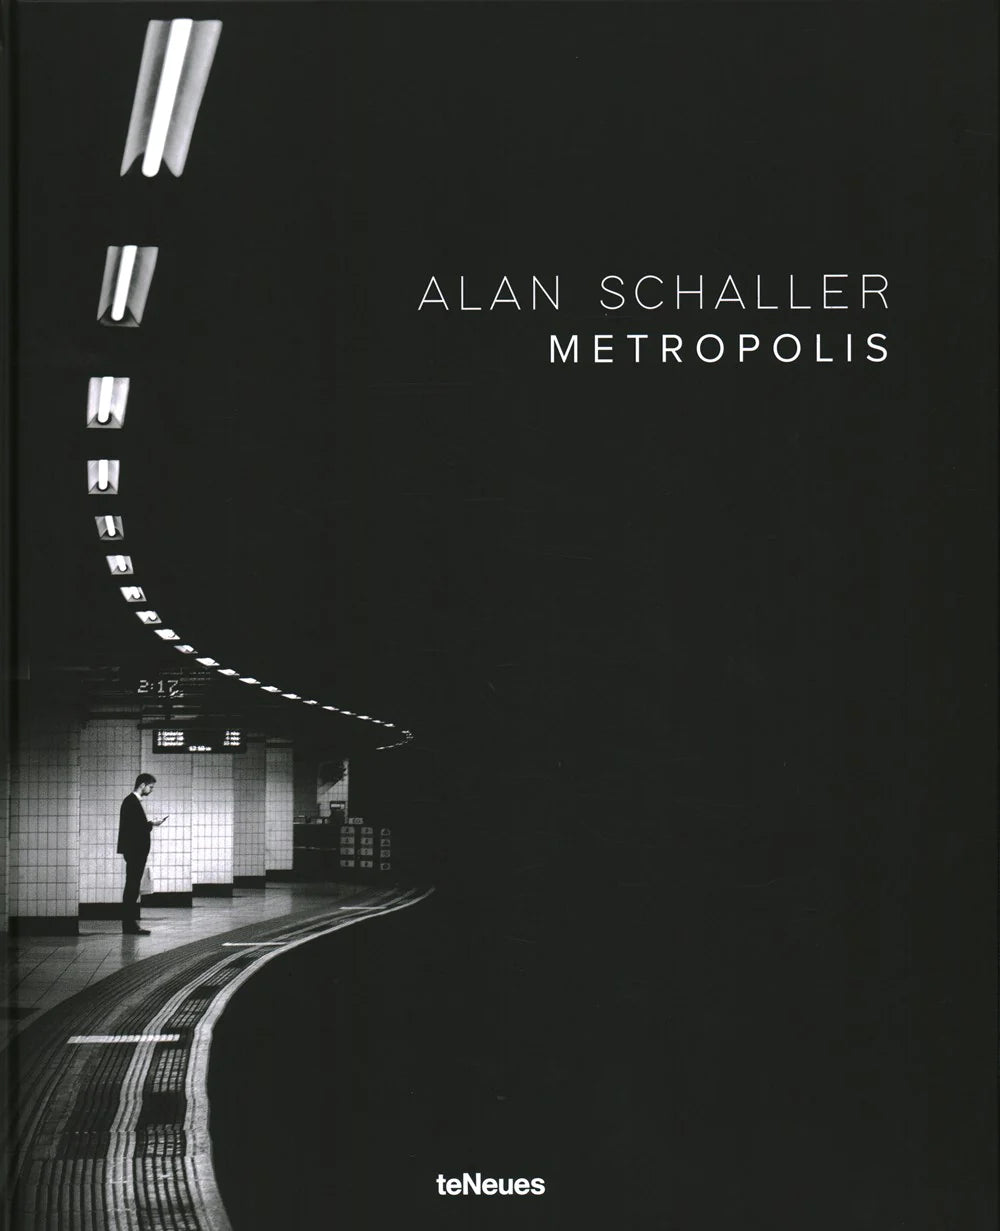 Metropolis by Alan Schaller